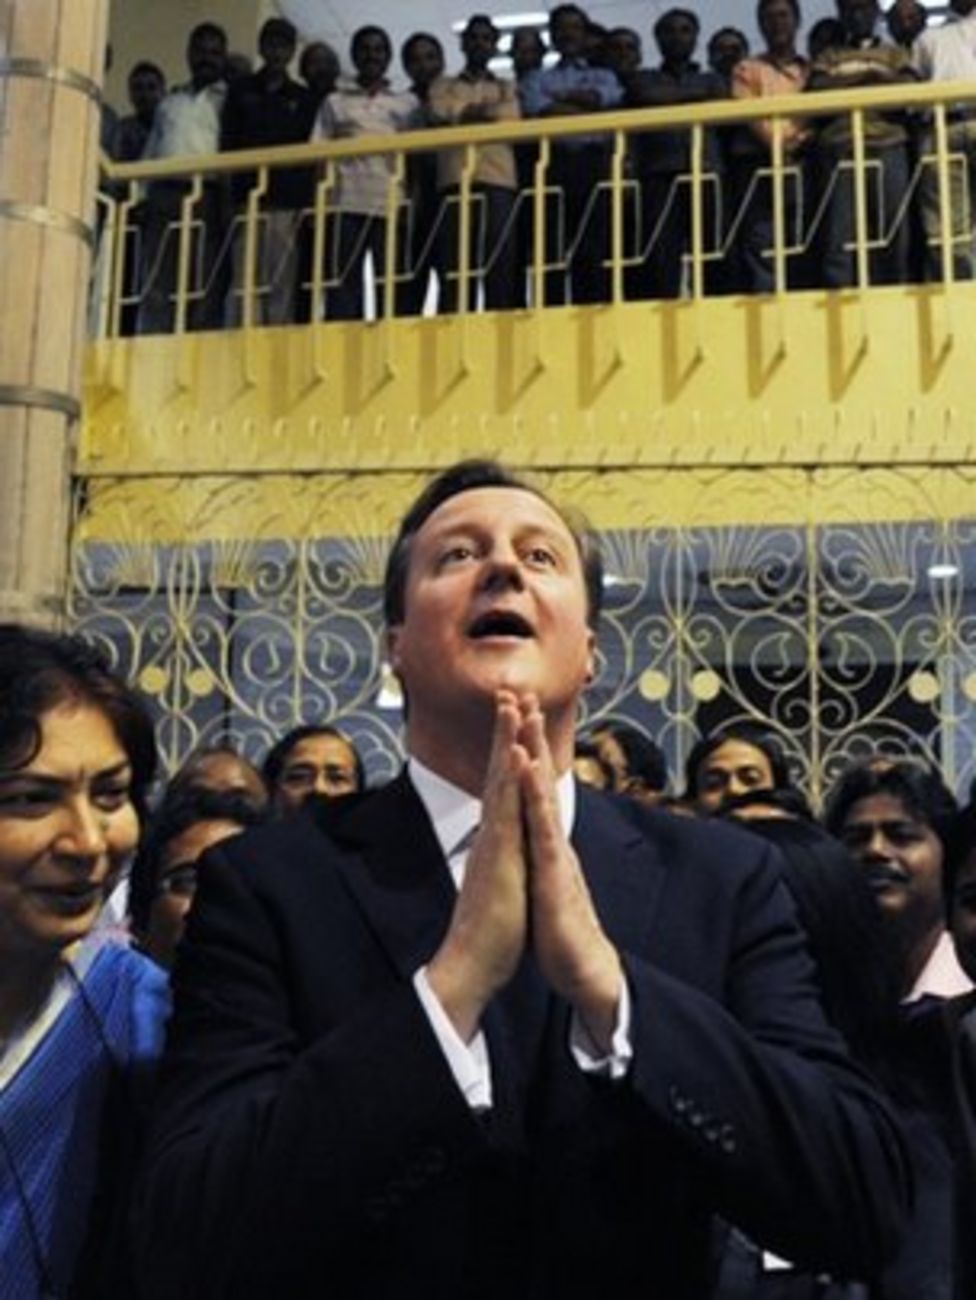 David Cameron Meets Indian Pm Manmohan Singh Bbc News